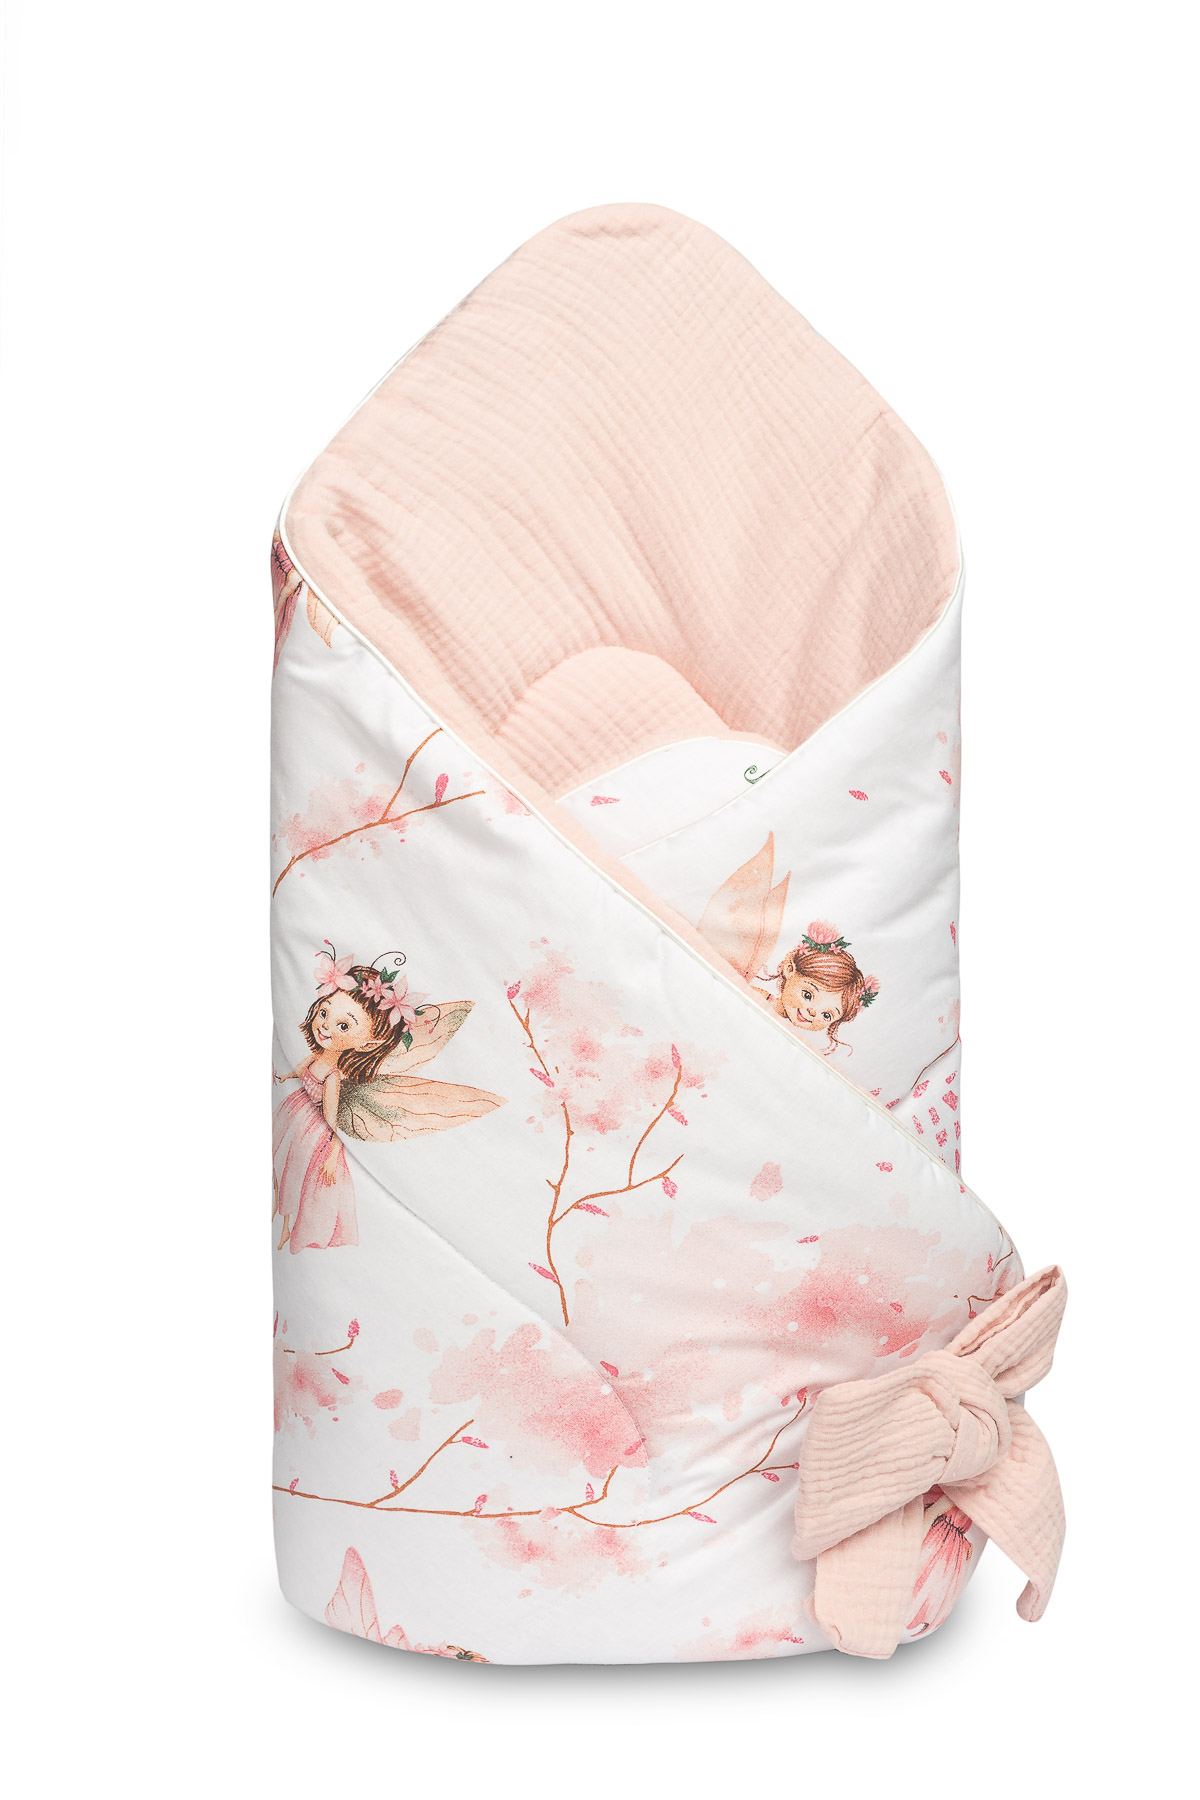 Muslin baby nest cone wrap 75×75 Pink – Fairy